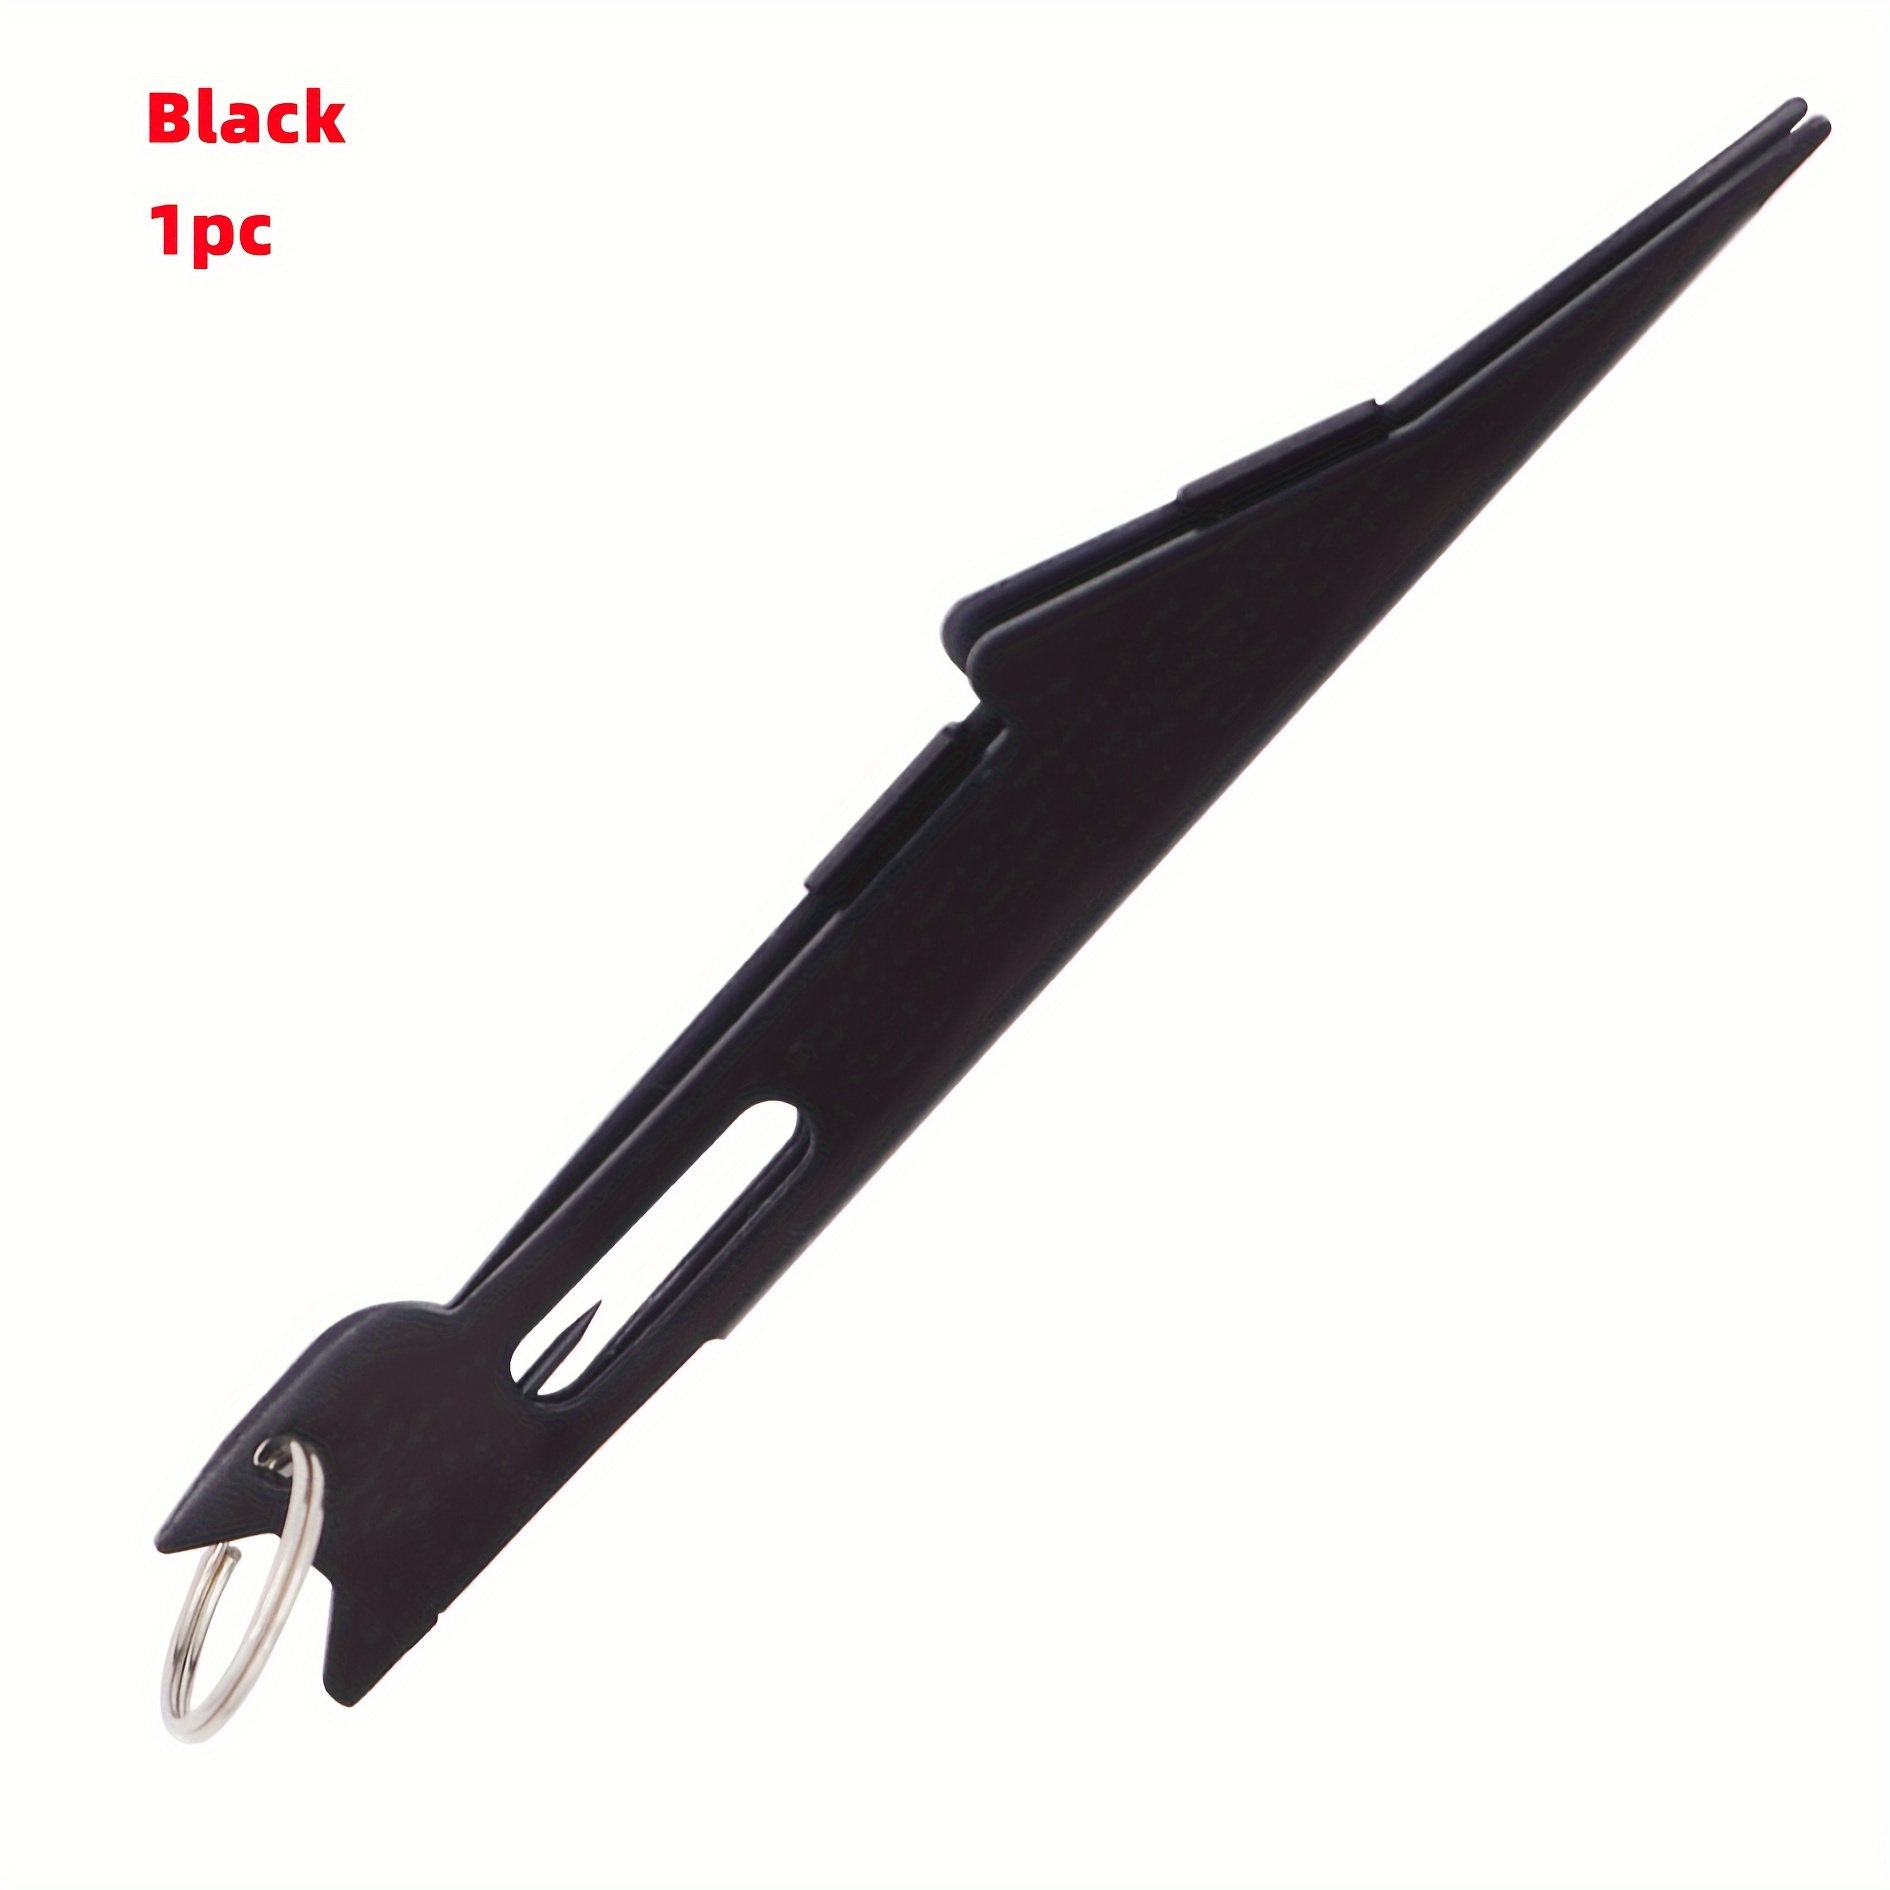 Tie-Fast Knot Tyer - black